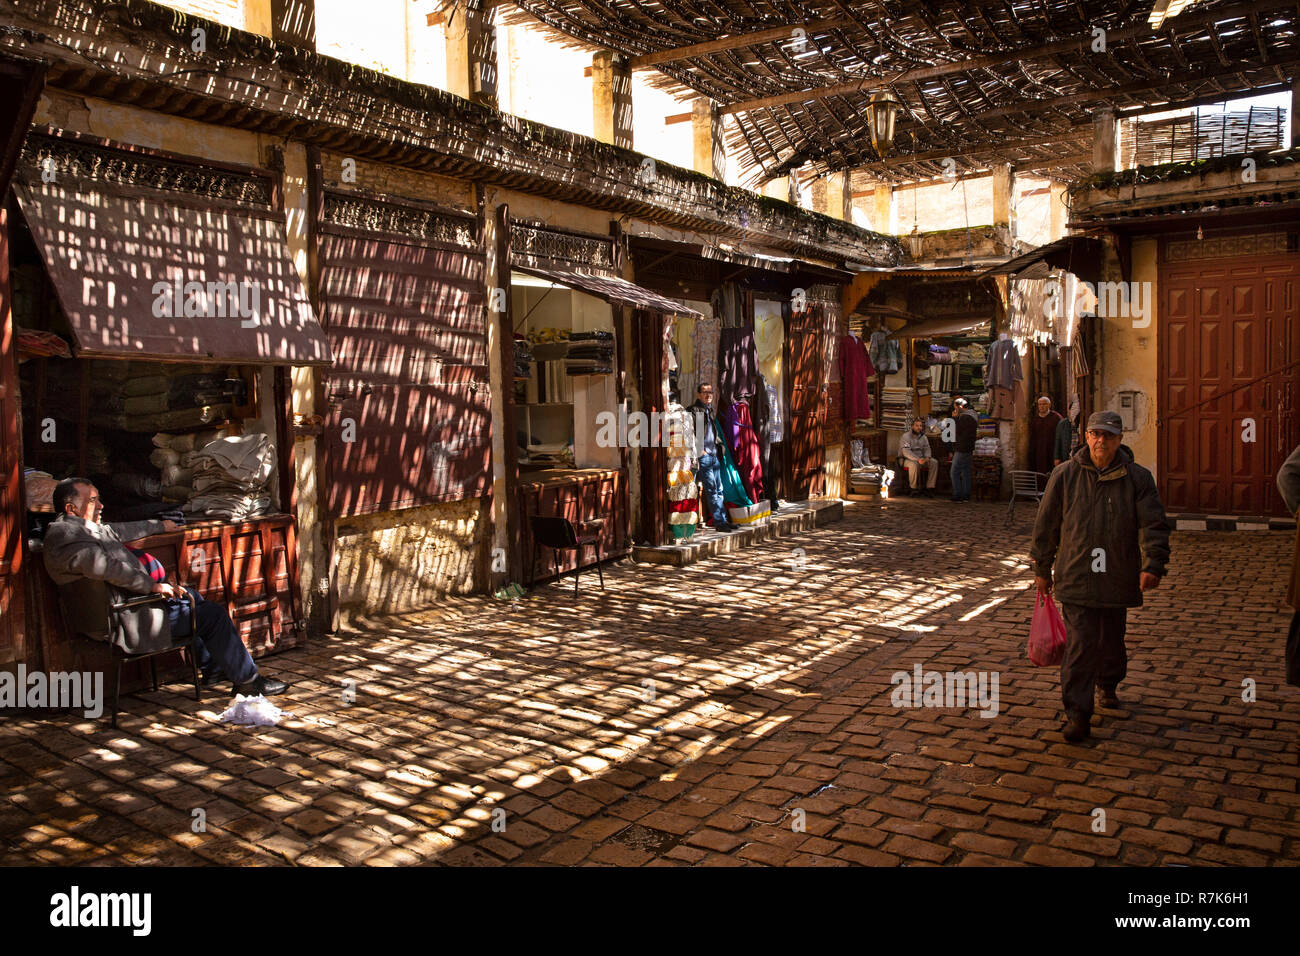 Marruecos, Fez, Fes el Bali, Medina, Talaa Kebira, sombra parcial en la tienda de ropa local patio Foto de stock